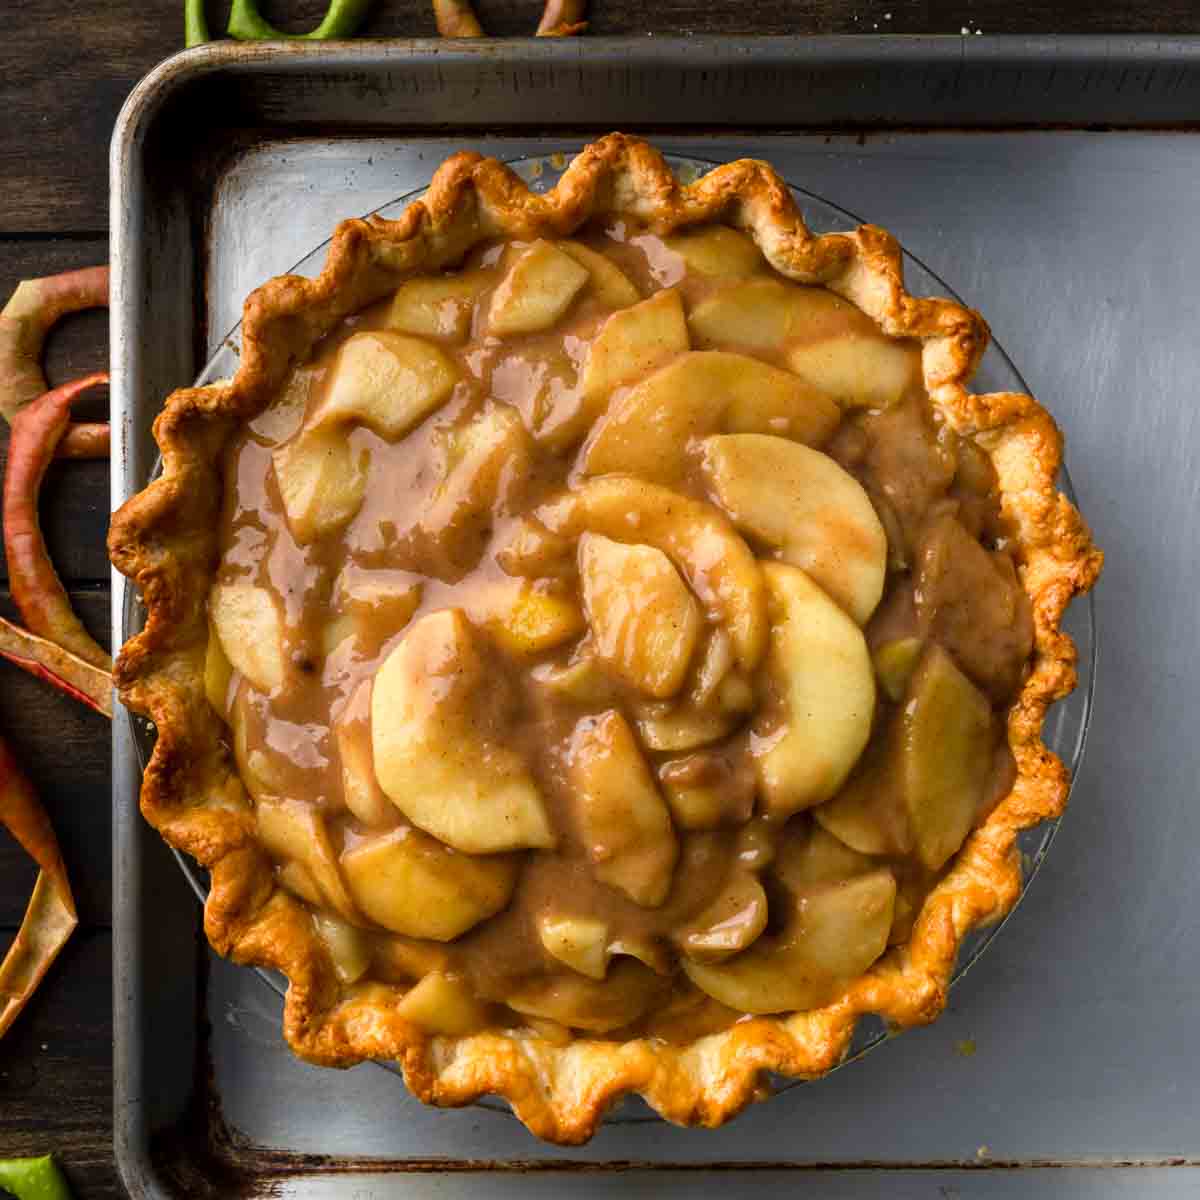 Apple pie filling in a blind baked pie crust